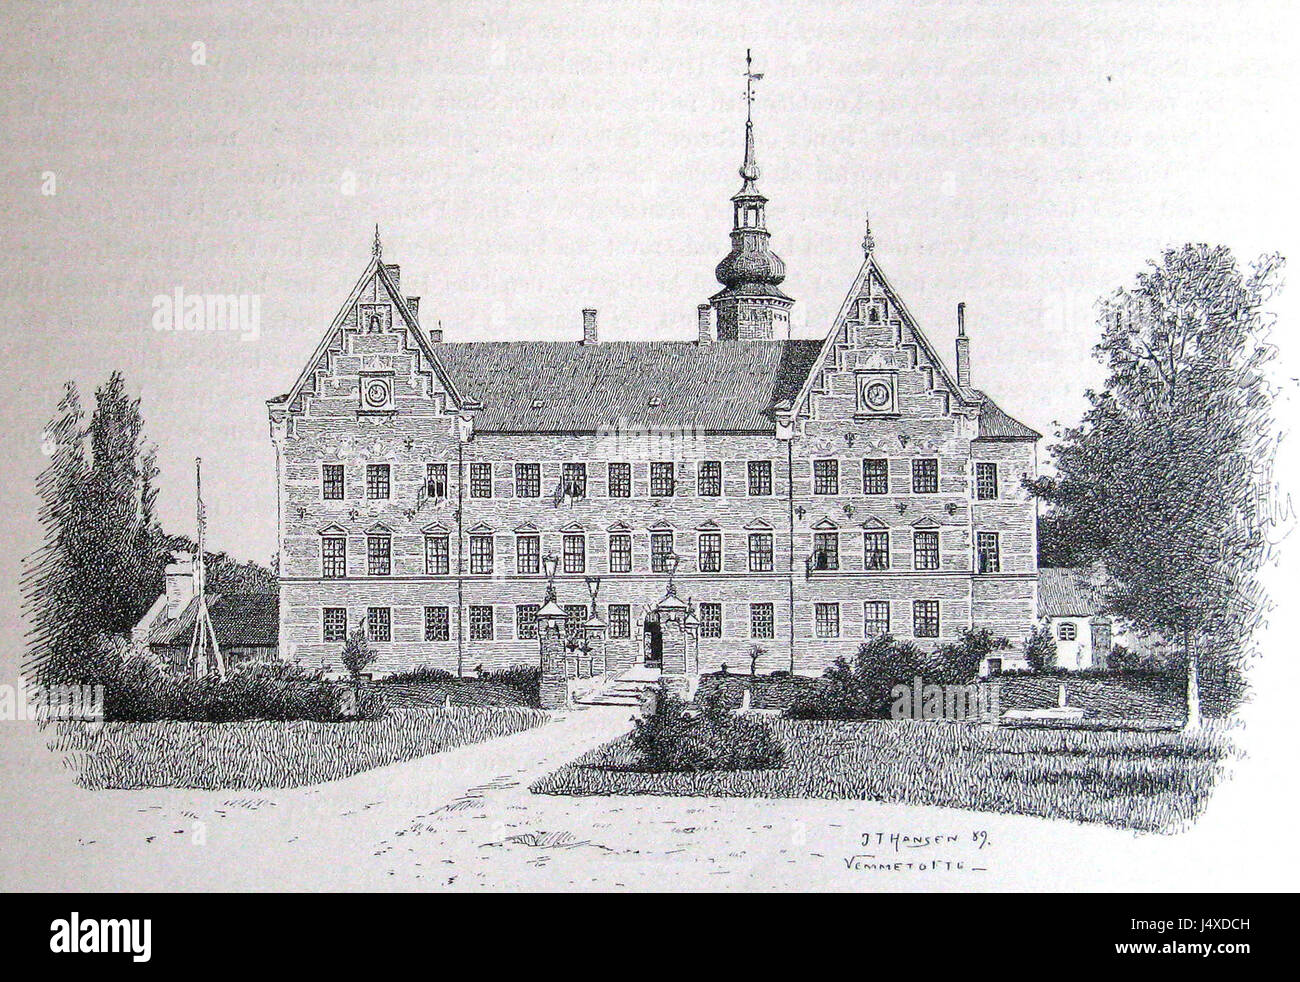 JT Vemmetofte Hansen 1889 Foto Stock